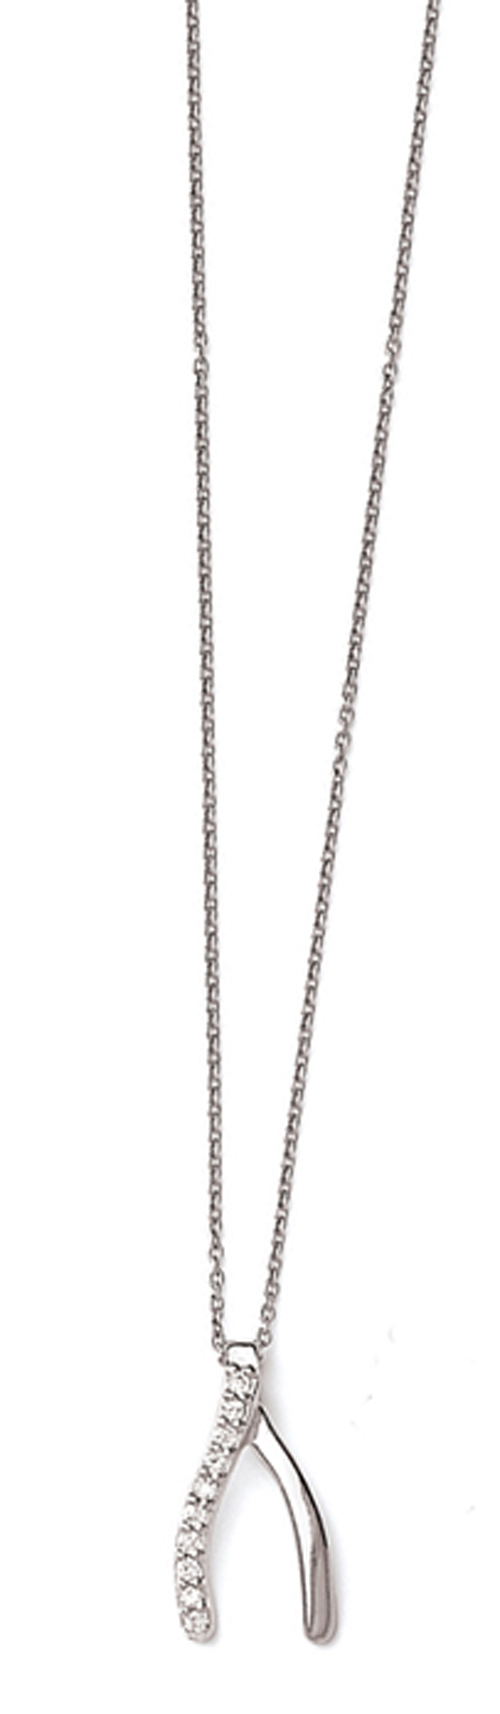 N0062 - Wishbone Pendant with Chain